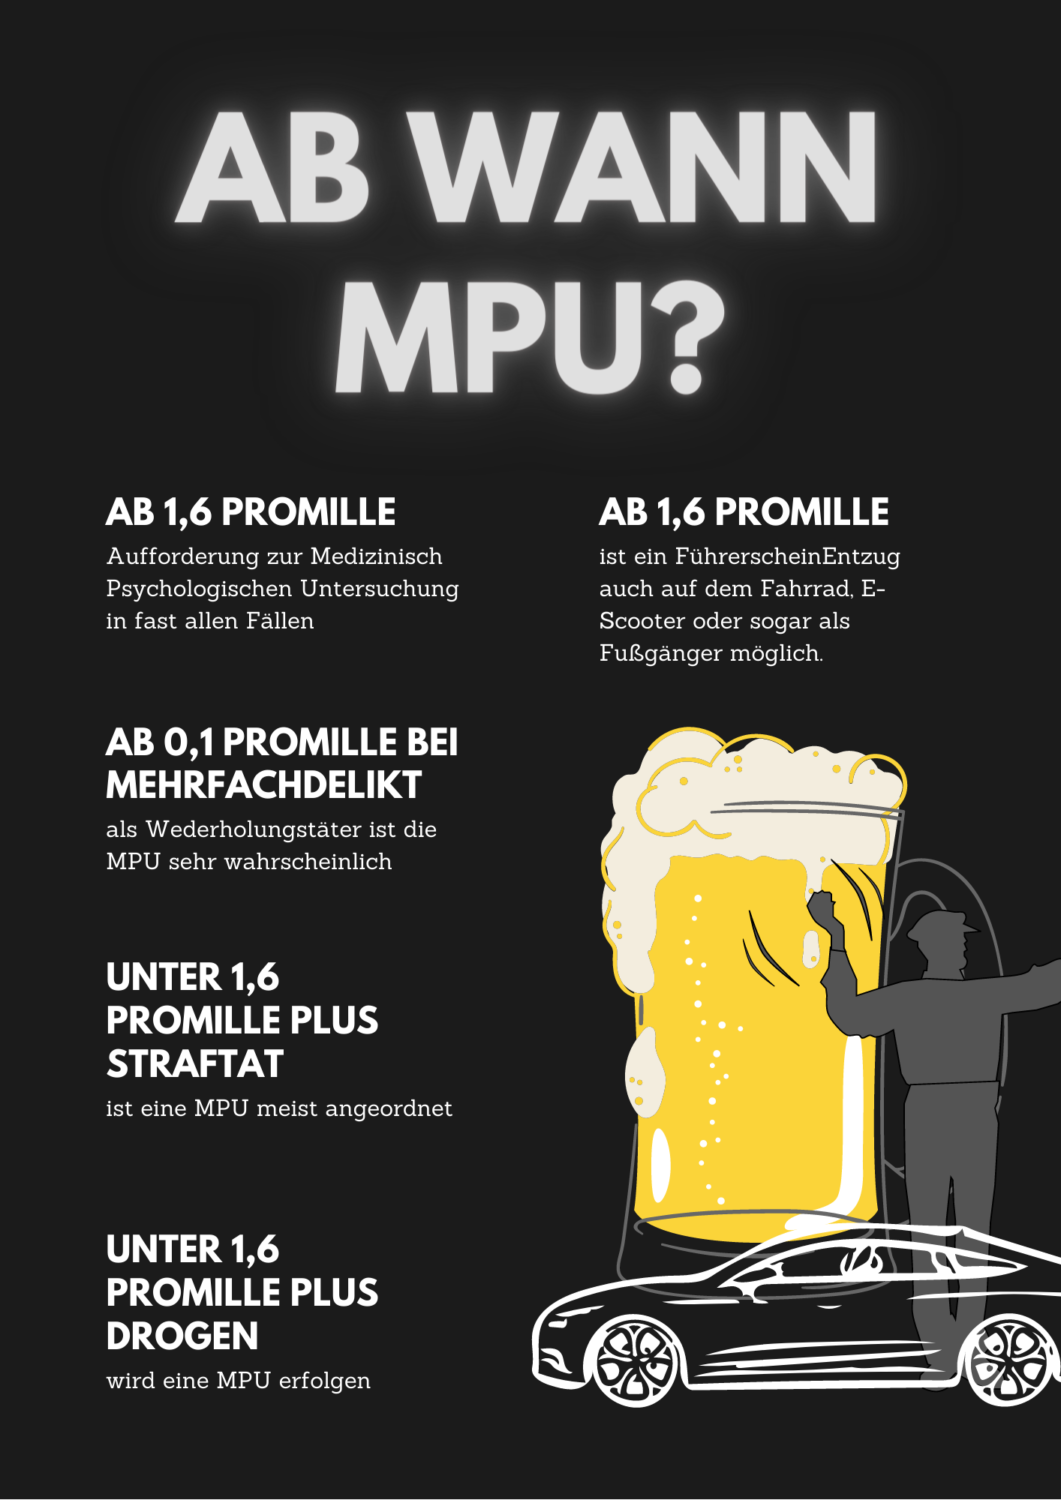 Ab wann MPU Alkohol MPU Vorbereitung online MPU Fragen